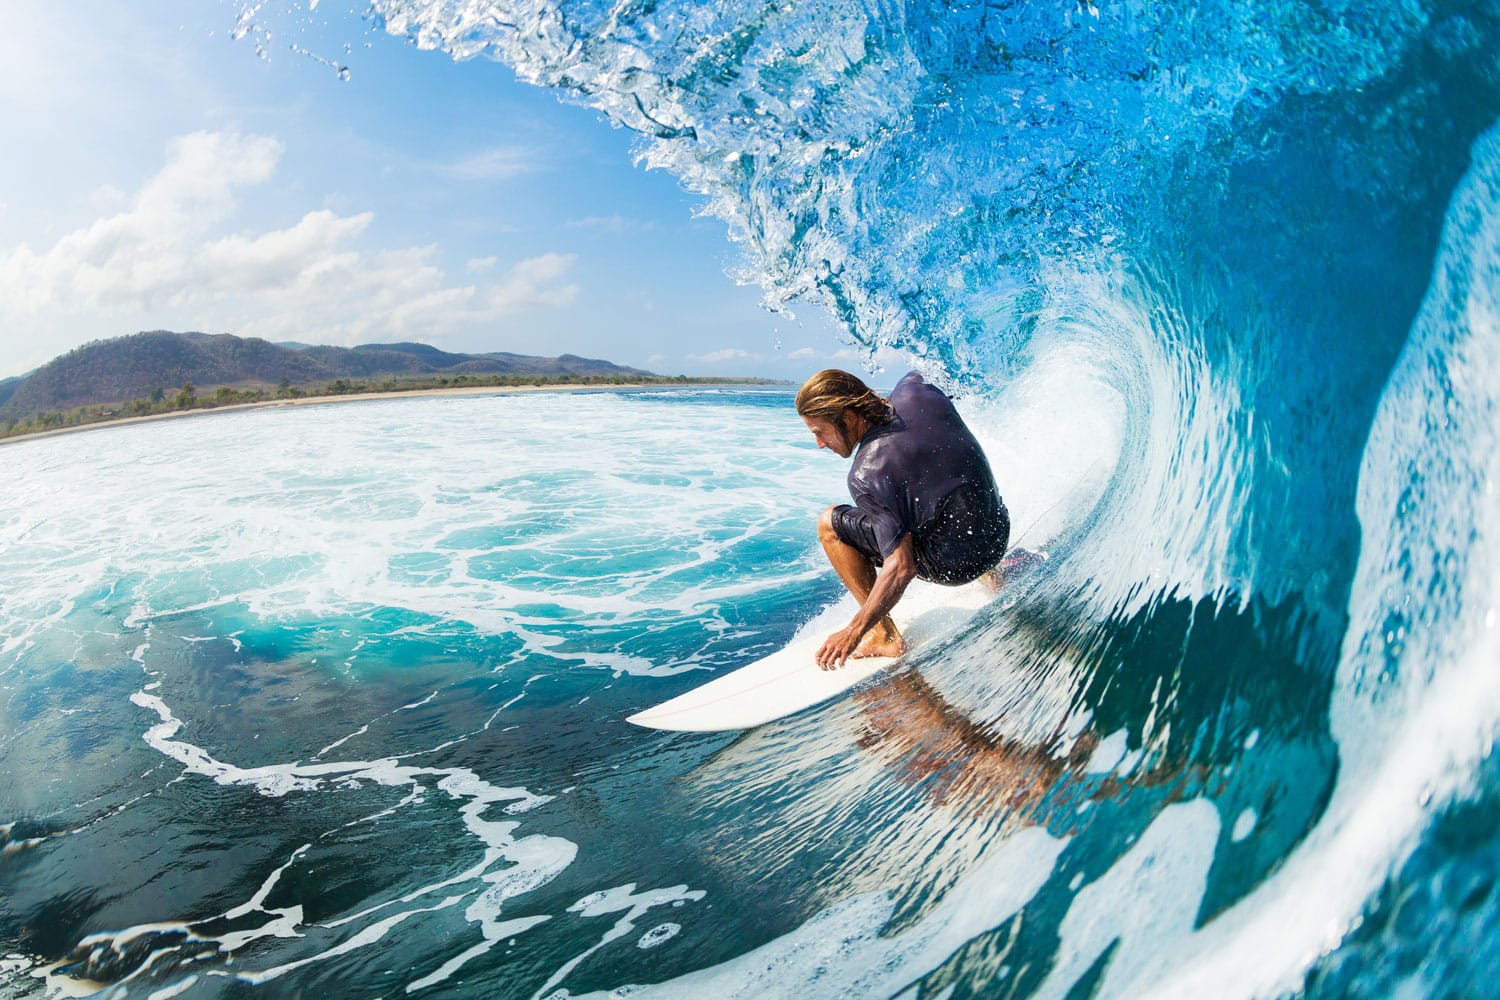 Man surfering a wave